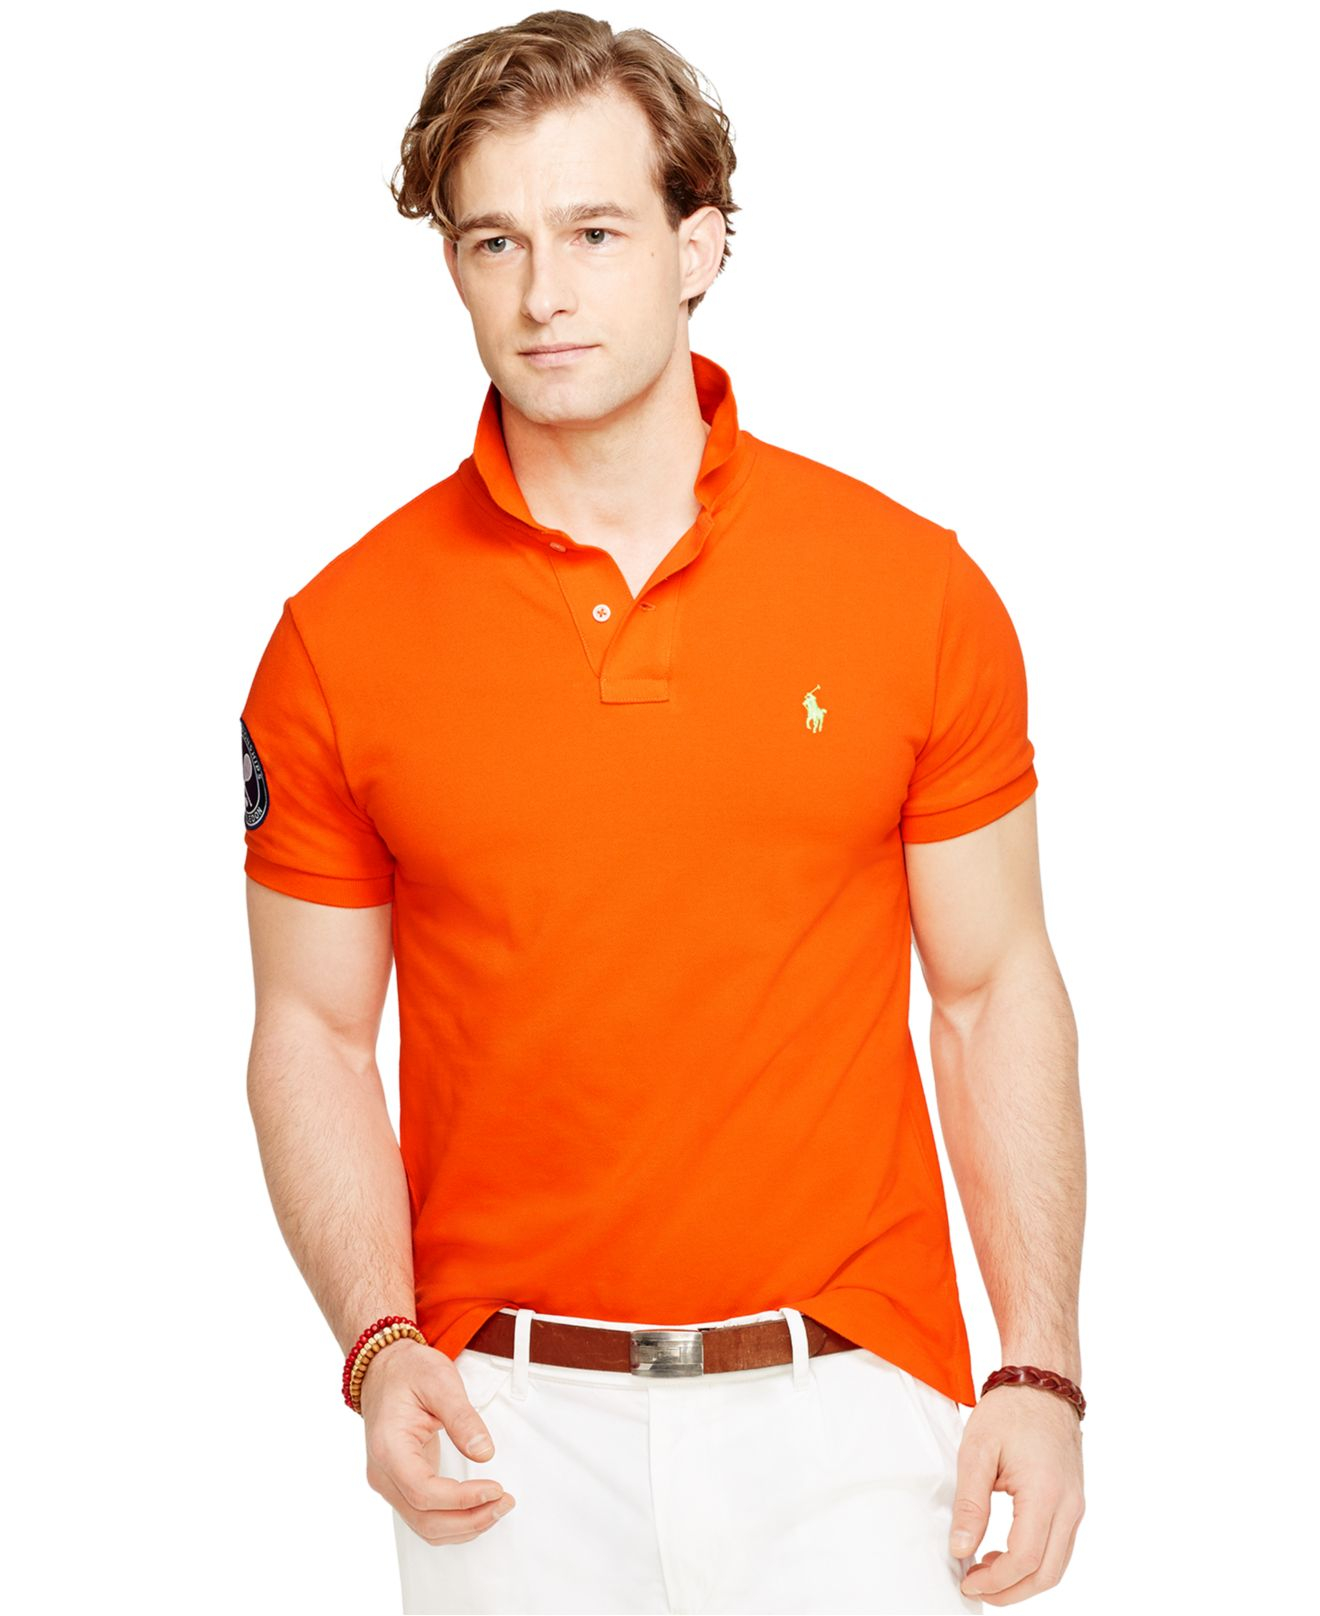 Lyst - Polo ralph lauren Wimbledon Custom-fit Polo Shirt in Orange for Men